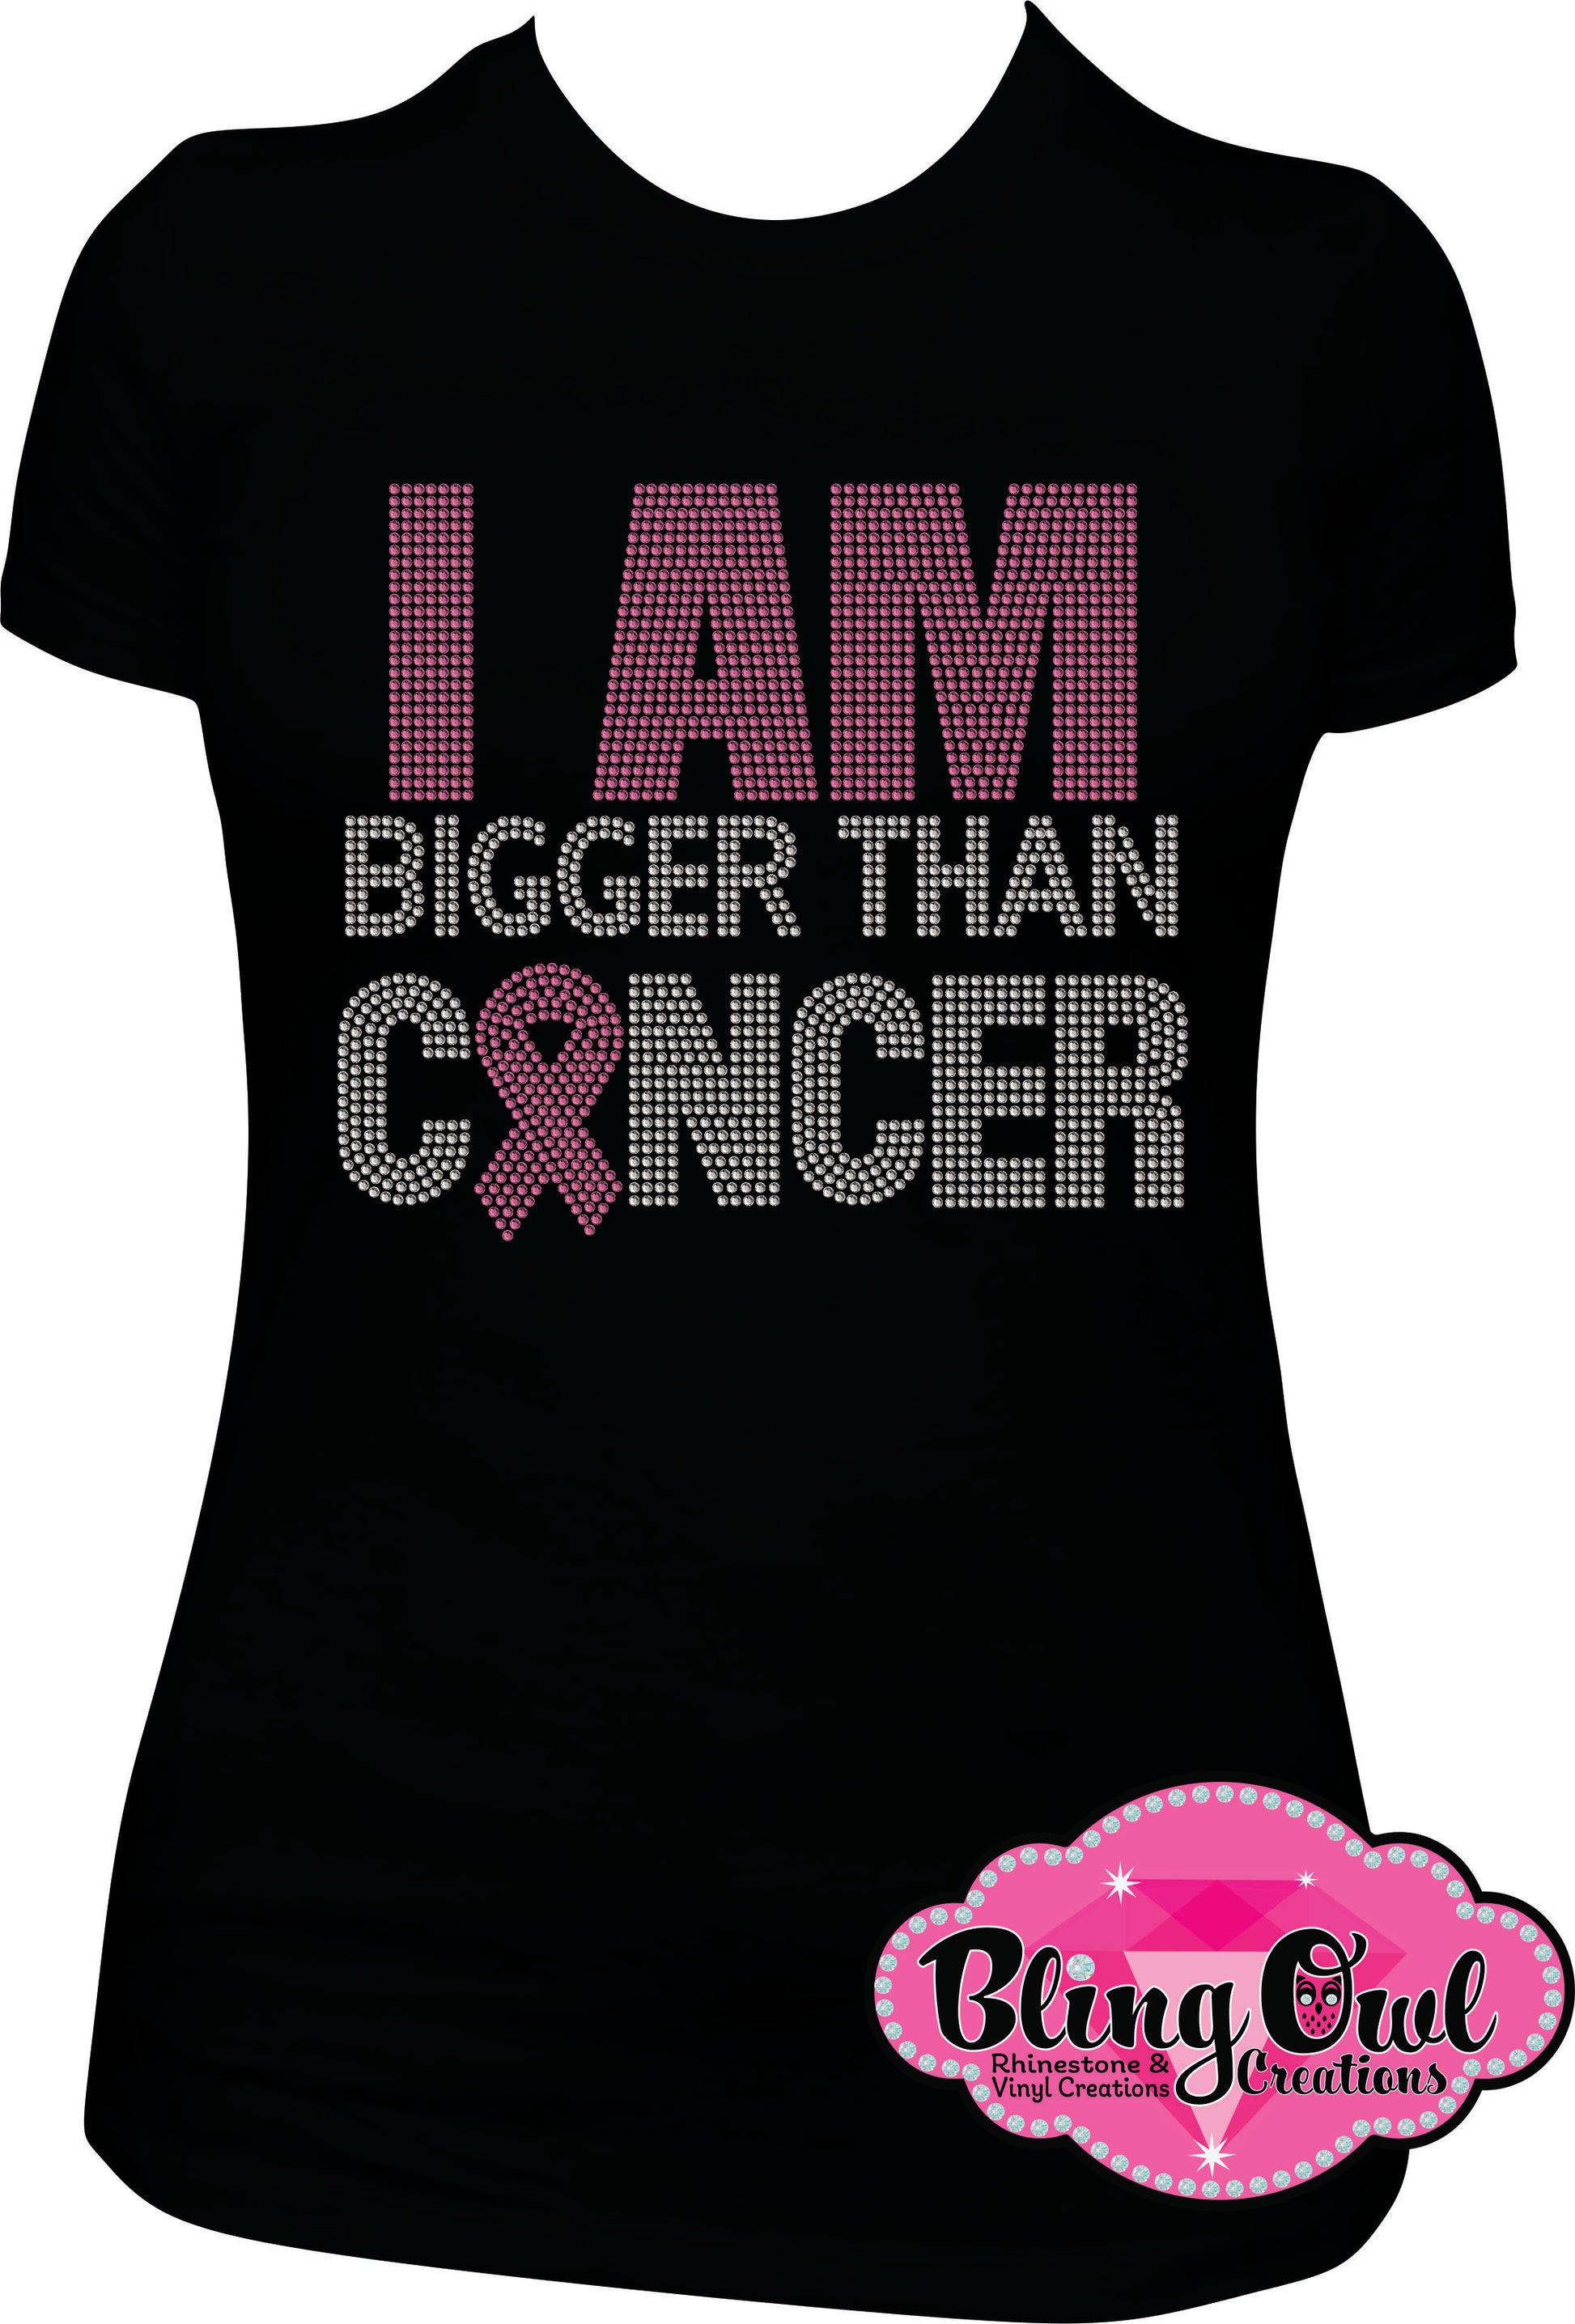 iam_bigger_than_cancer design shirt rhinestones sparkle bling